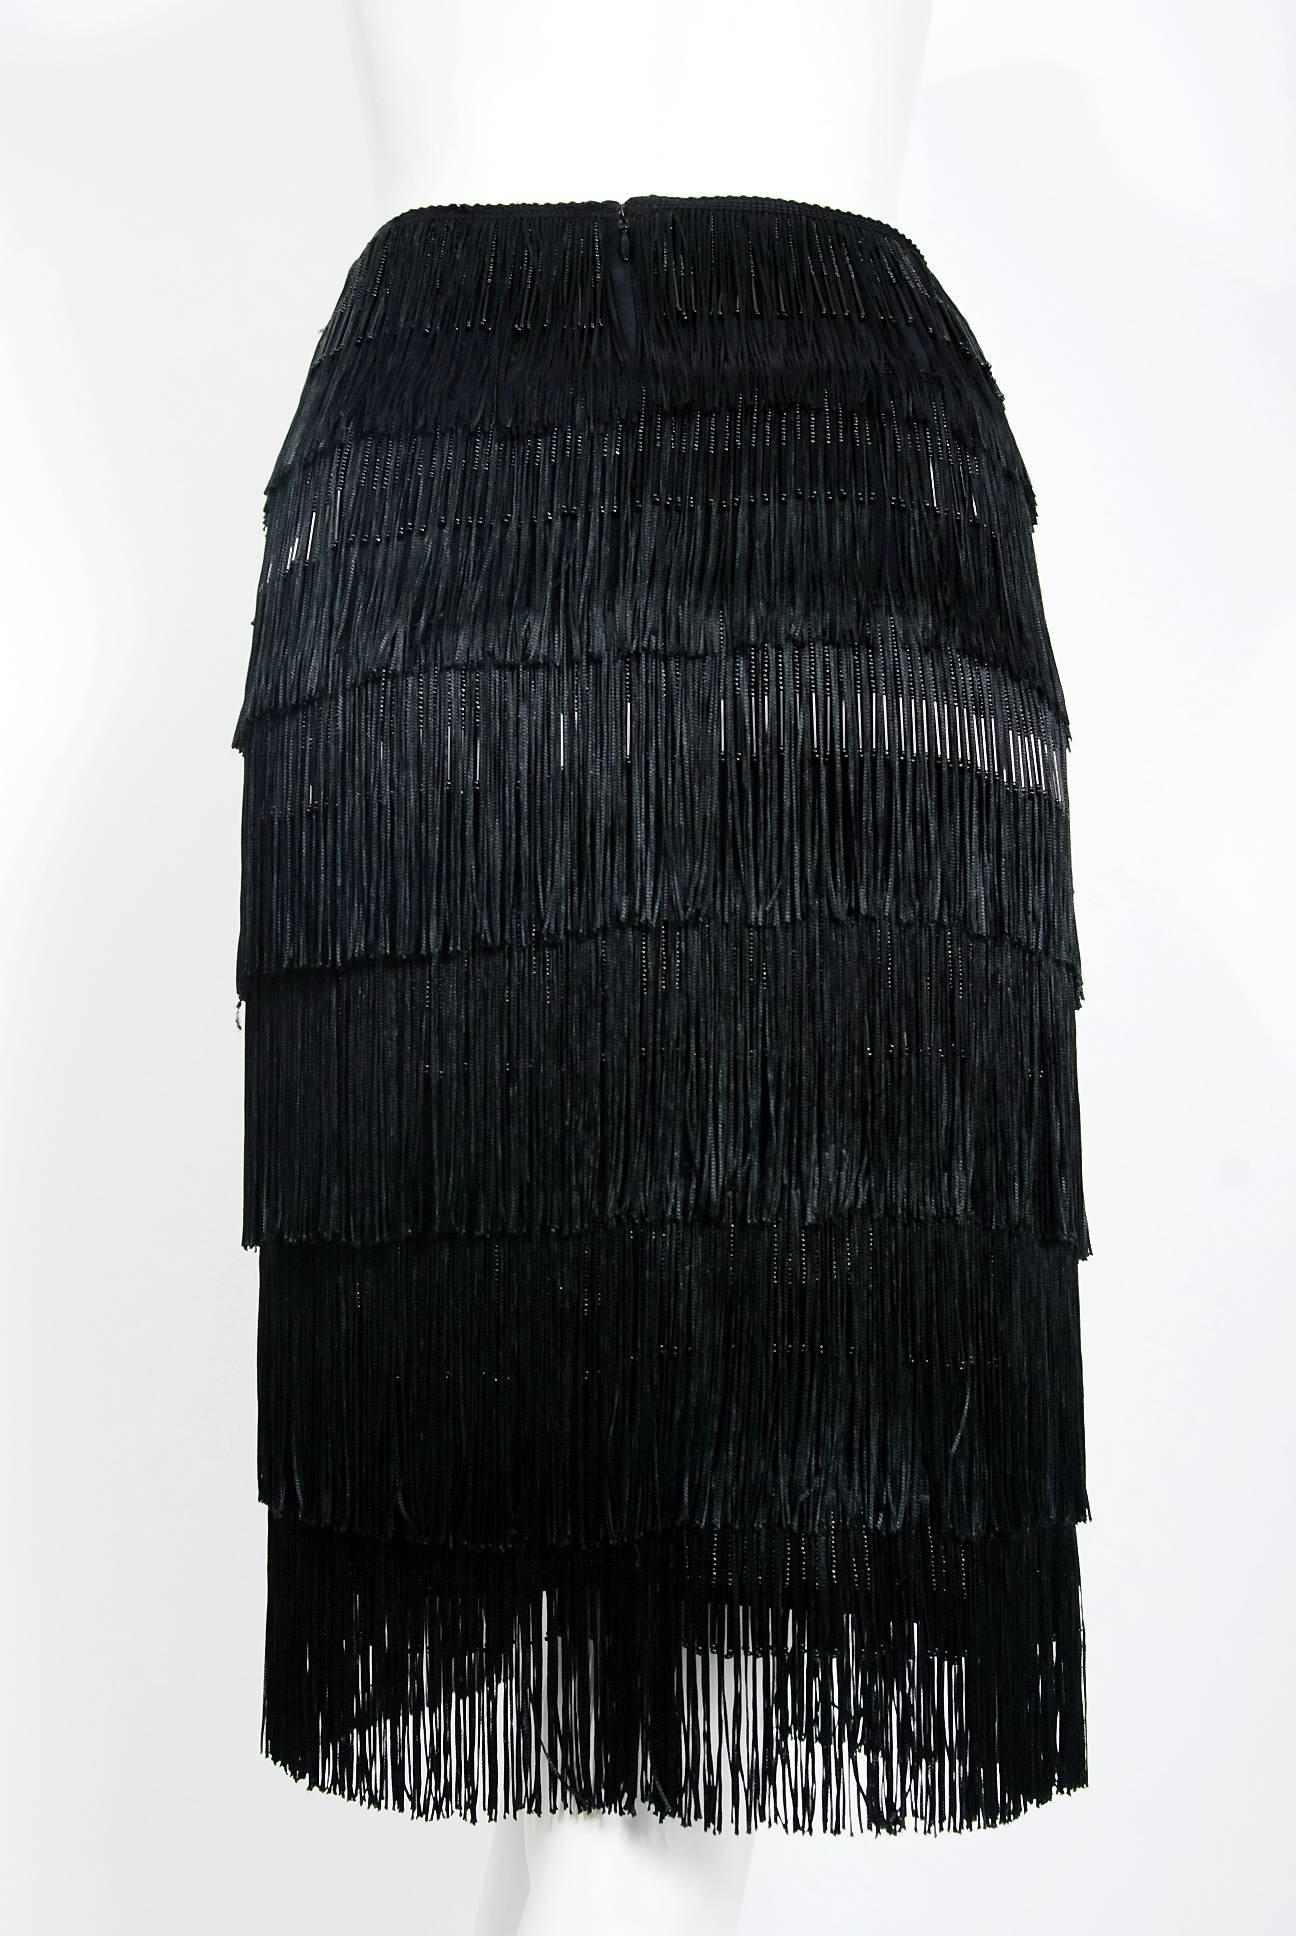 2005 Alexander McQueen Documented Black Beaded Silk Tiered Fringe Flapper Skirt 3